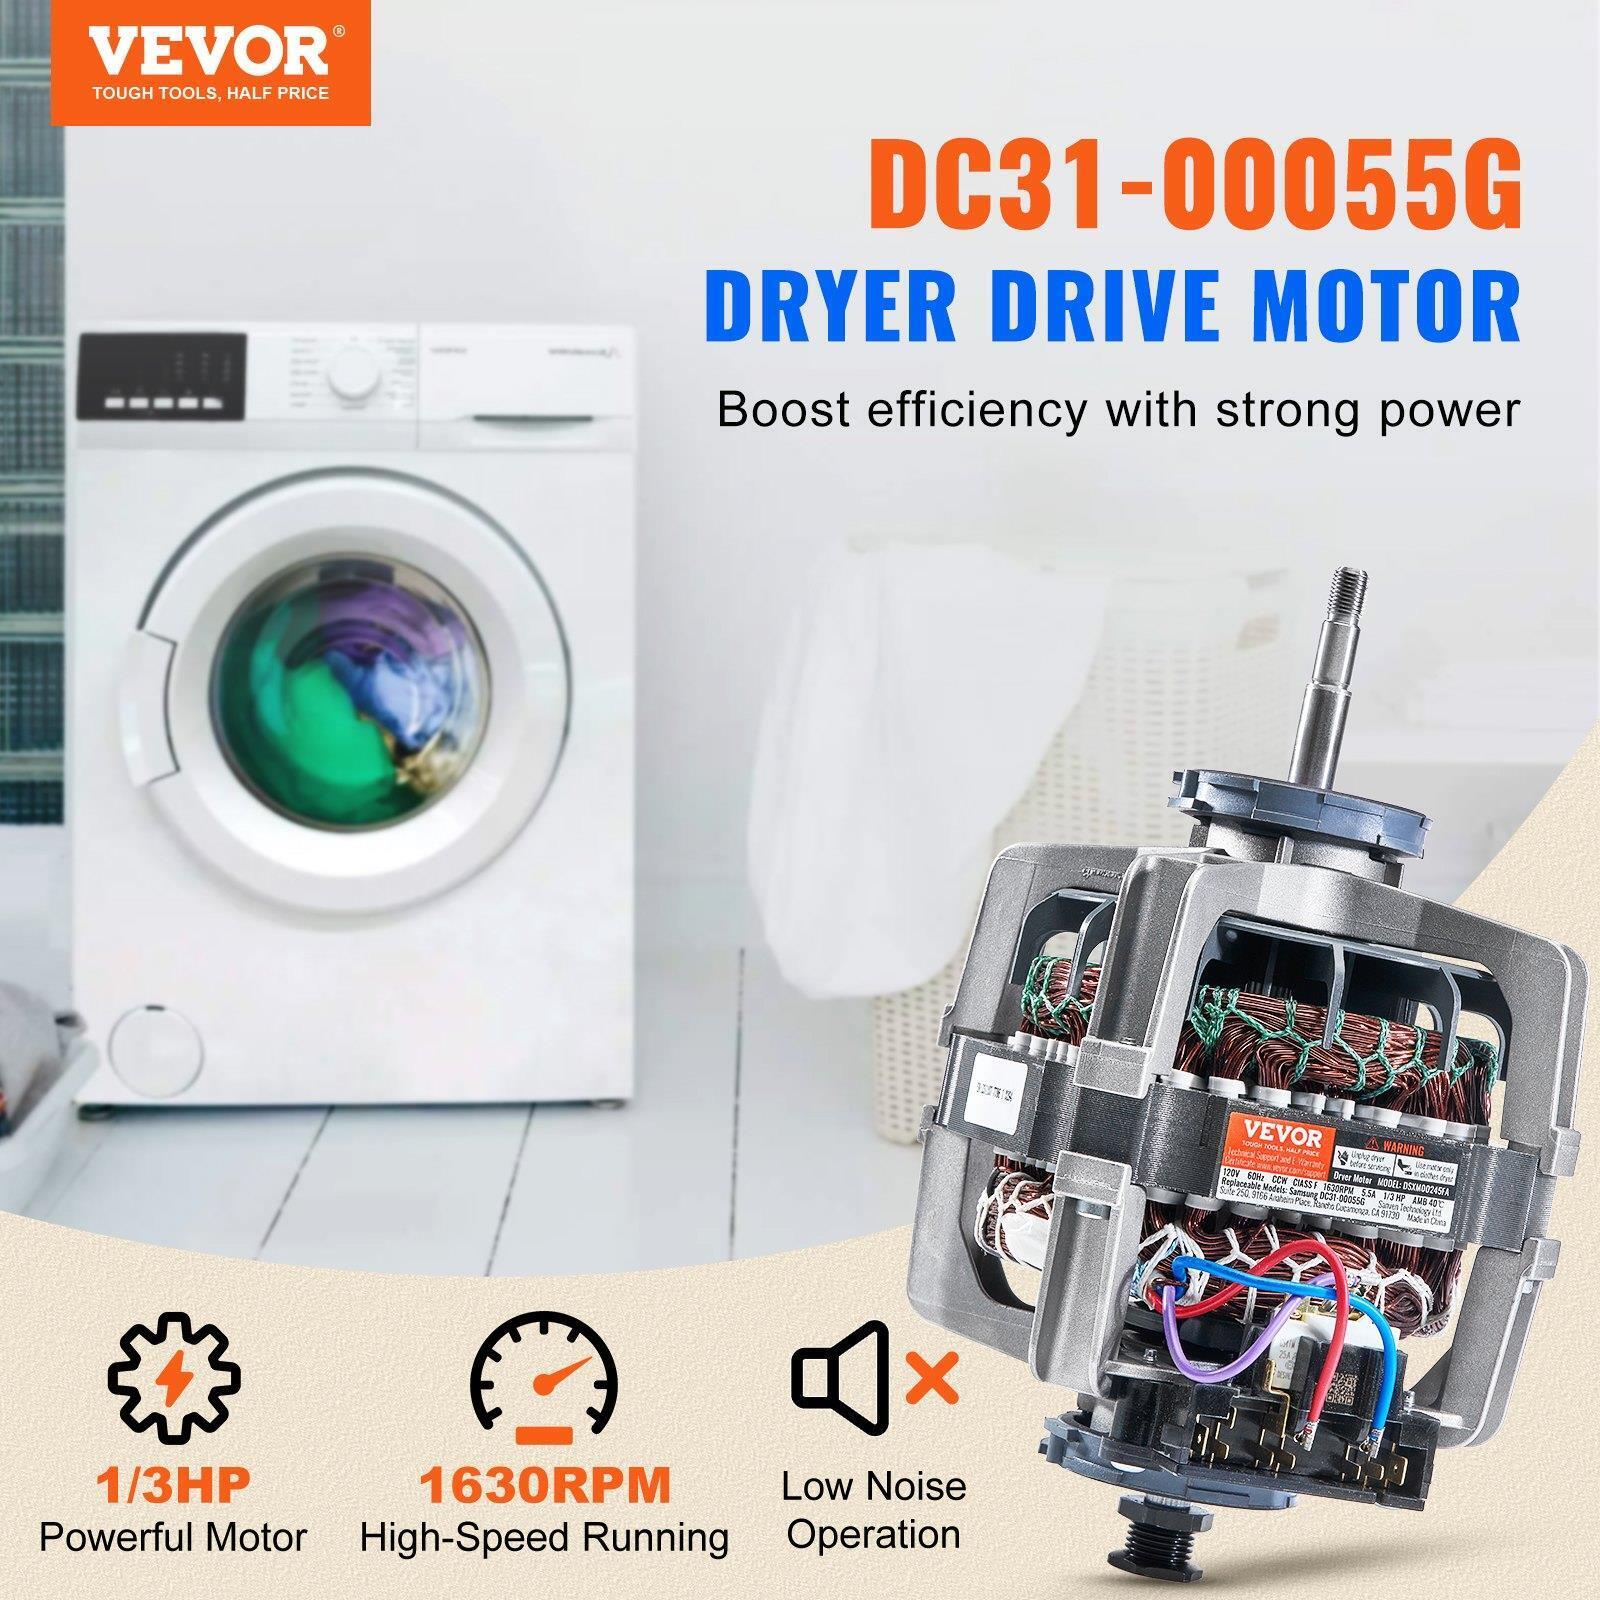 VEVOR DC31-00055G Dryer Drive Motor, 1/3HP, 1630RPM, Compatible with Samsung Ken